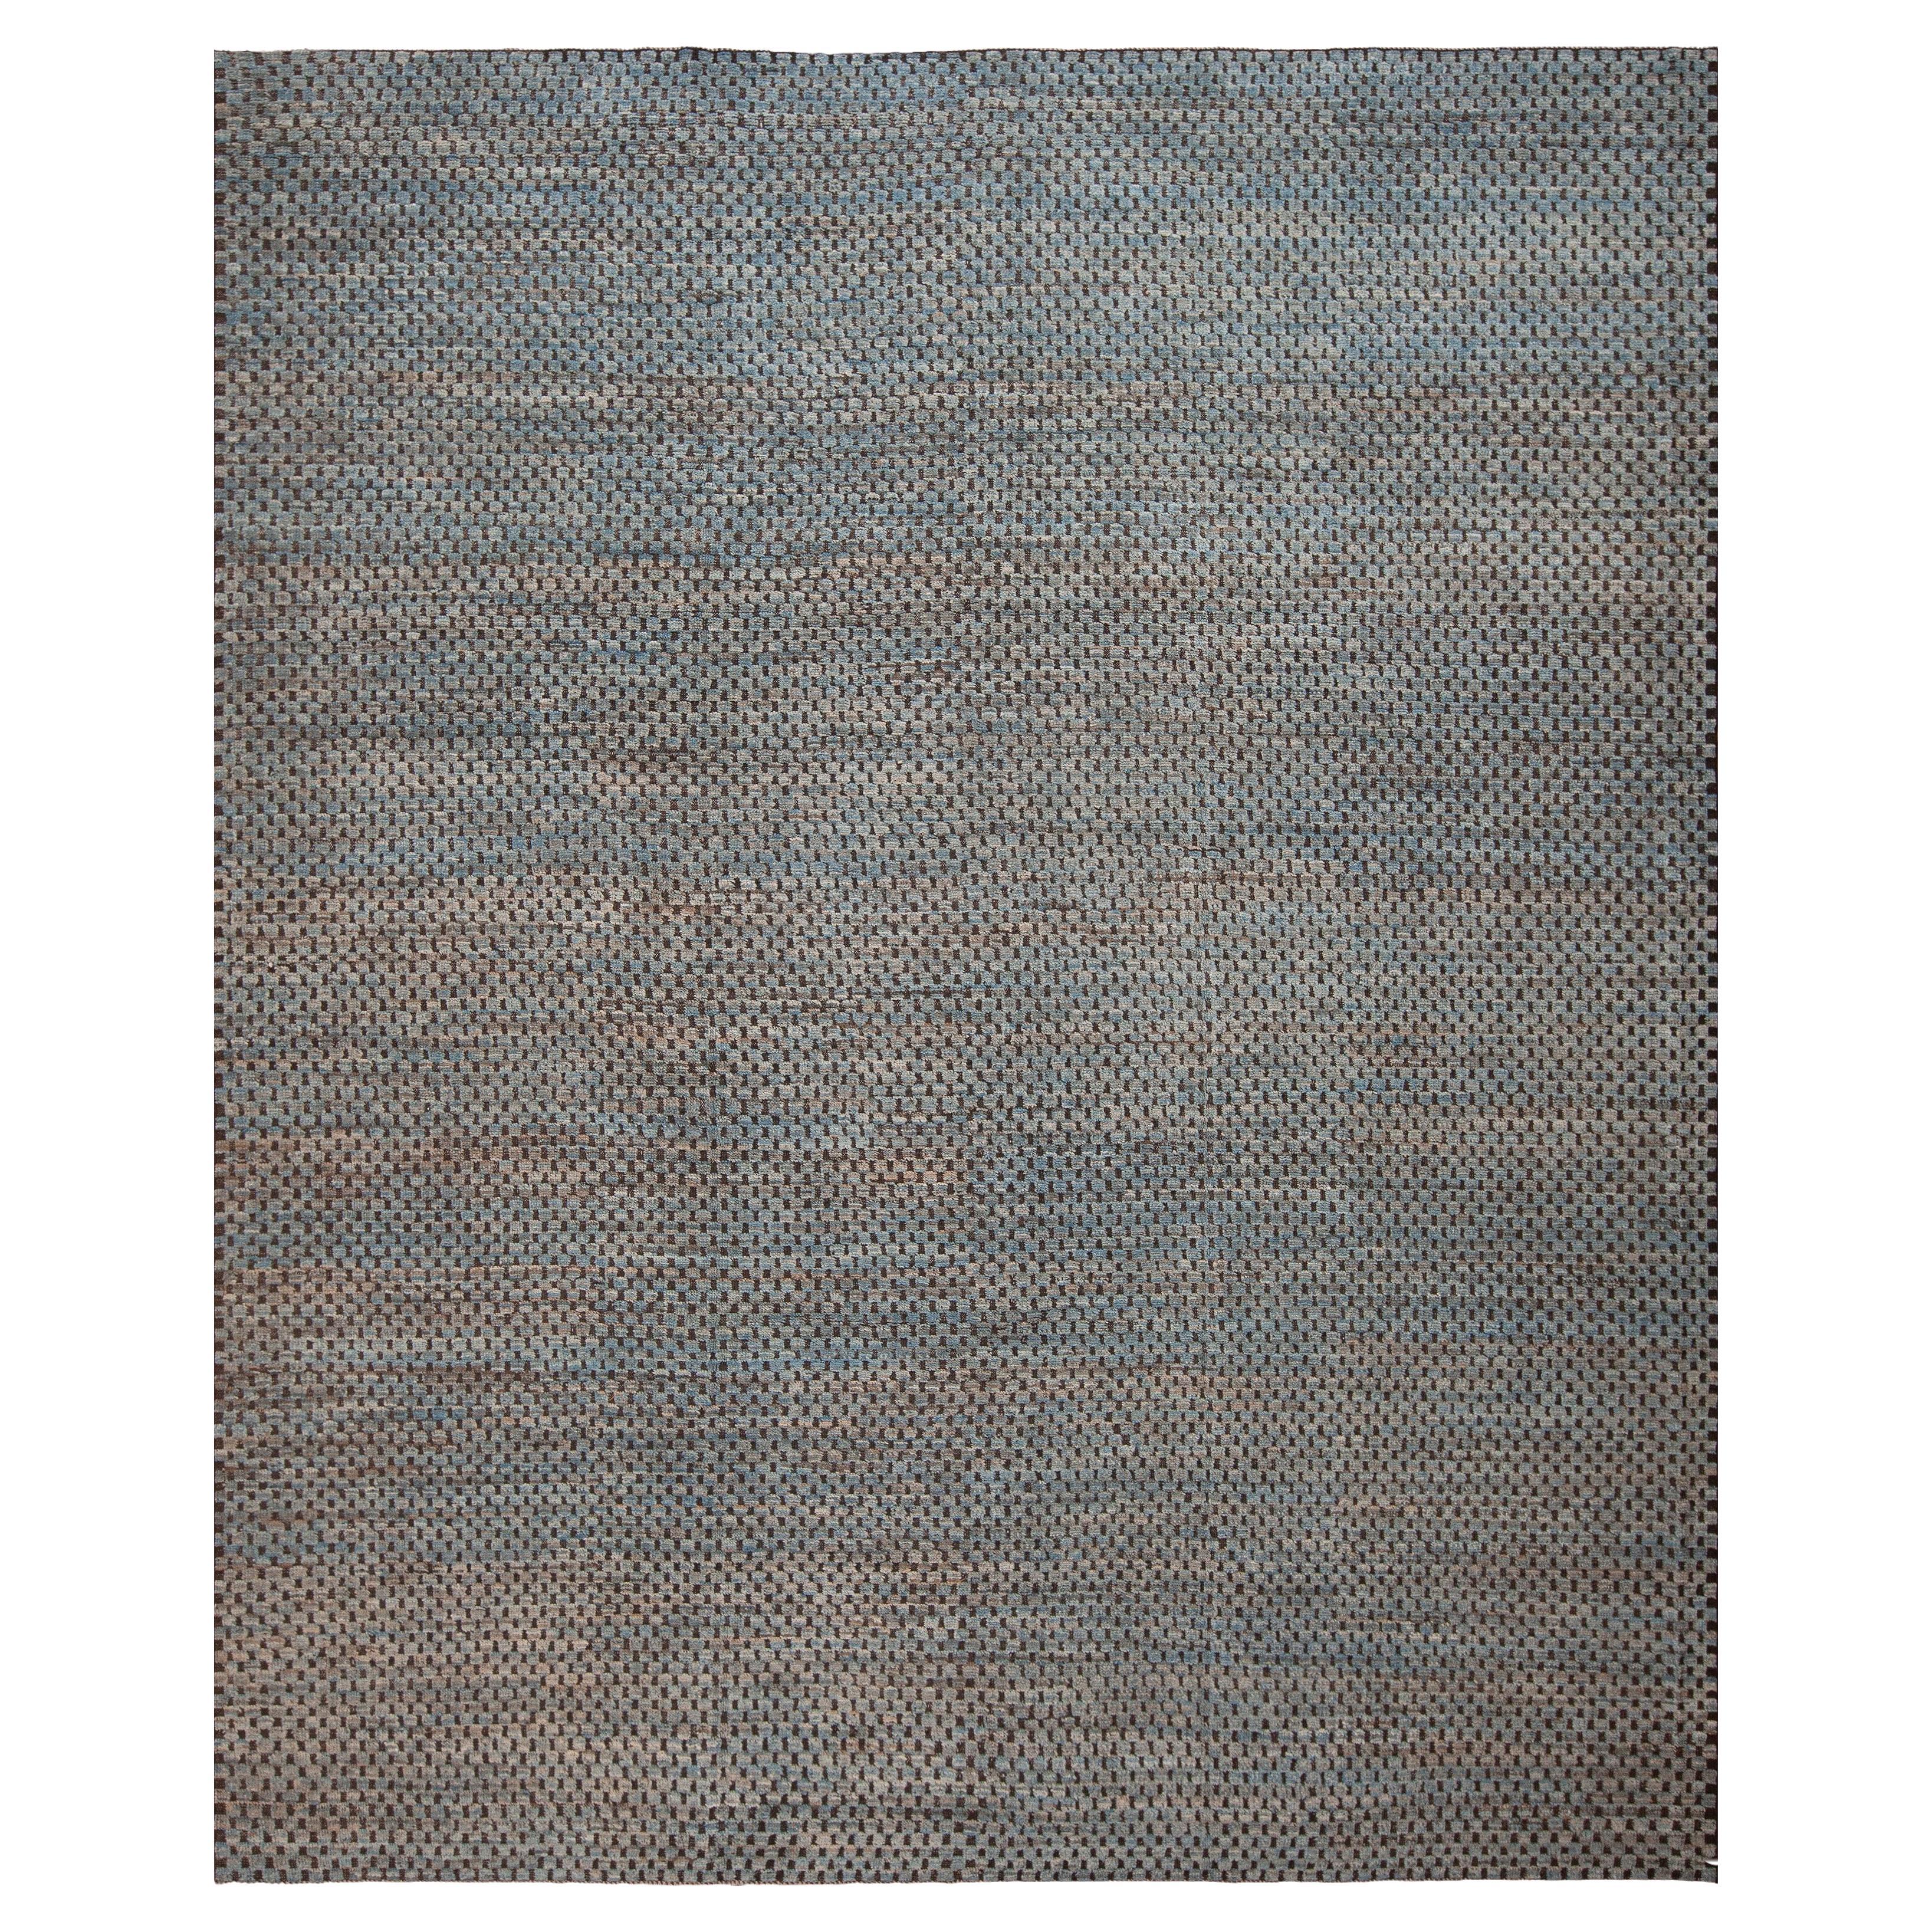 Collection Nazmiyal, motif damier bleu, tapis moderne à poils de laine 9'9" x 11'10"